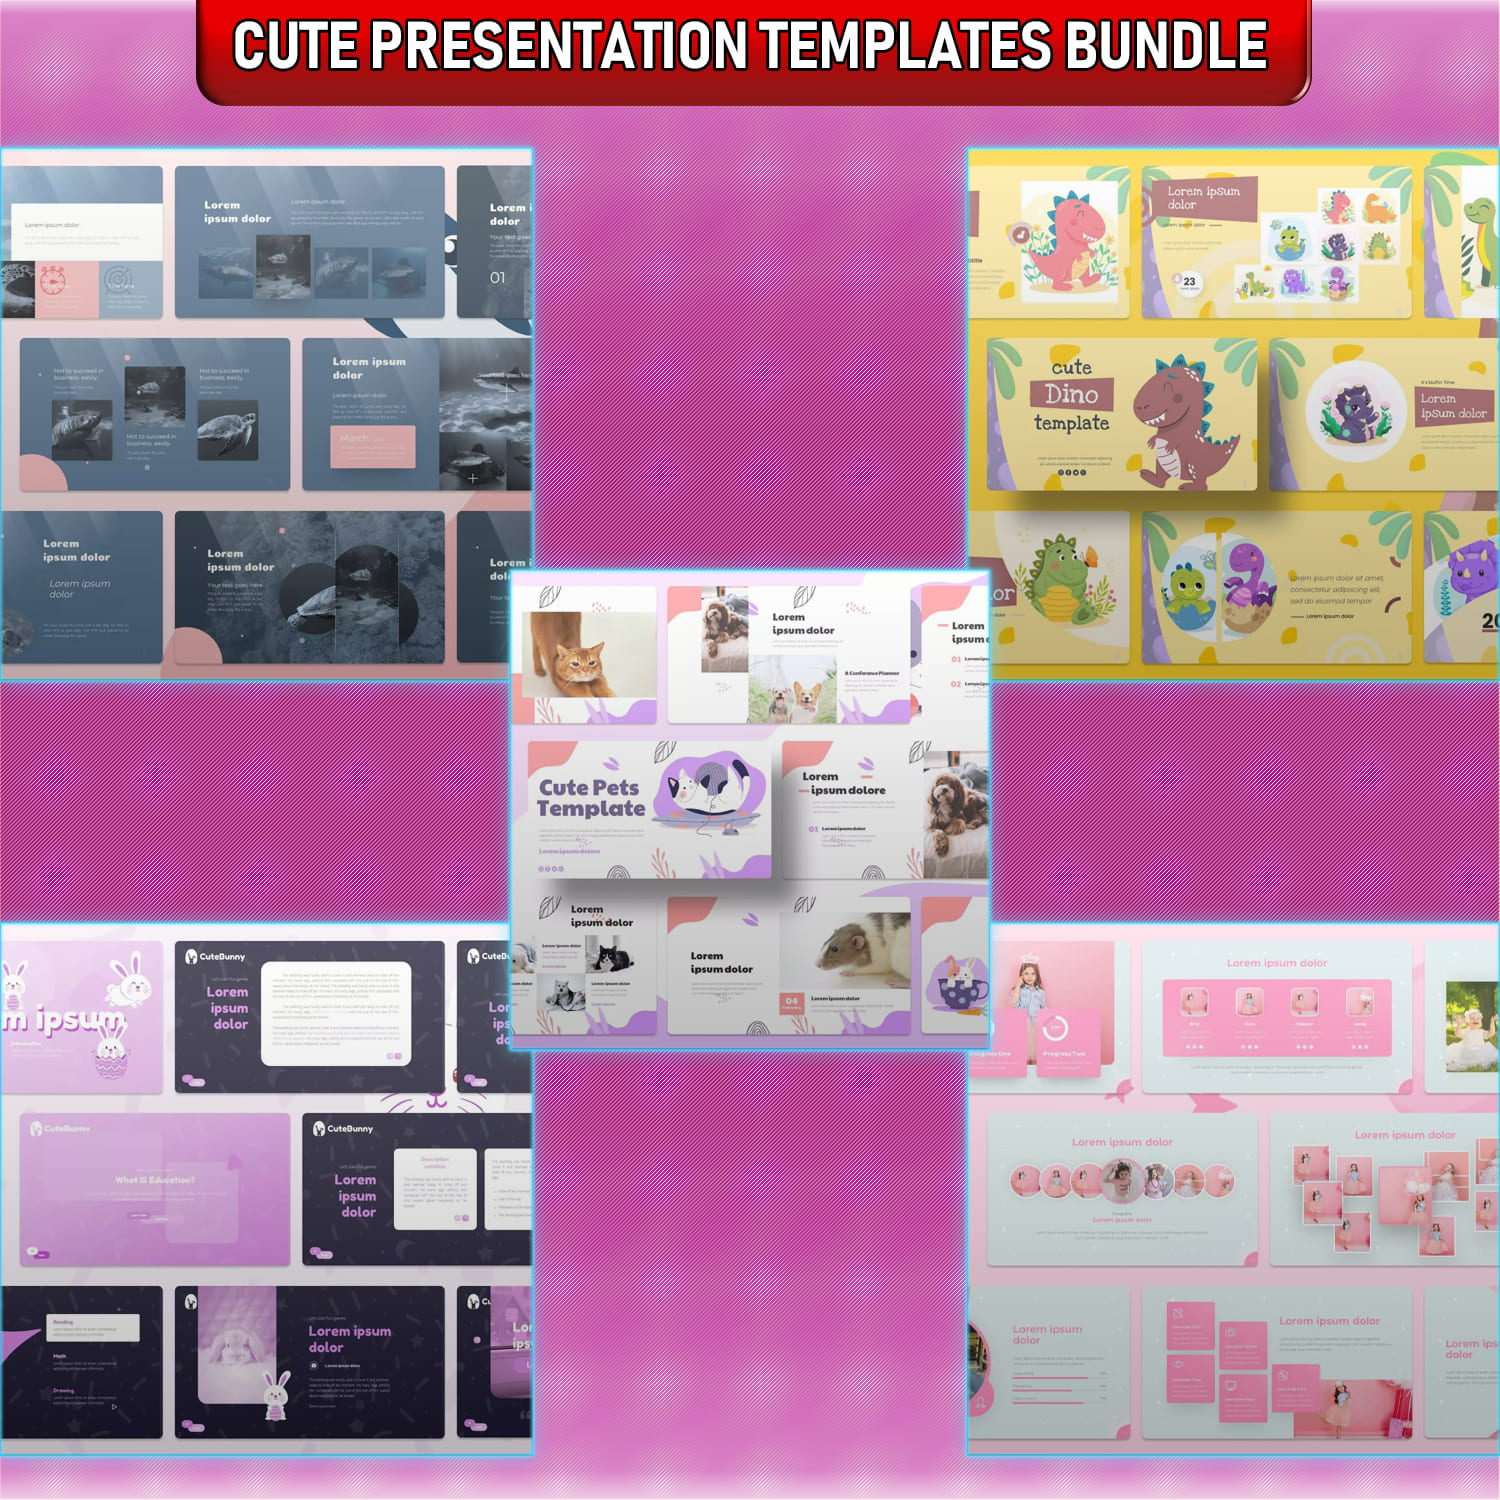 Cute Presentation Templates Bundle Cover.